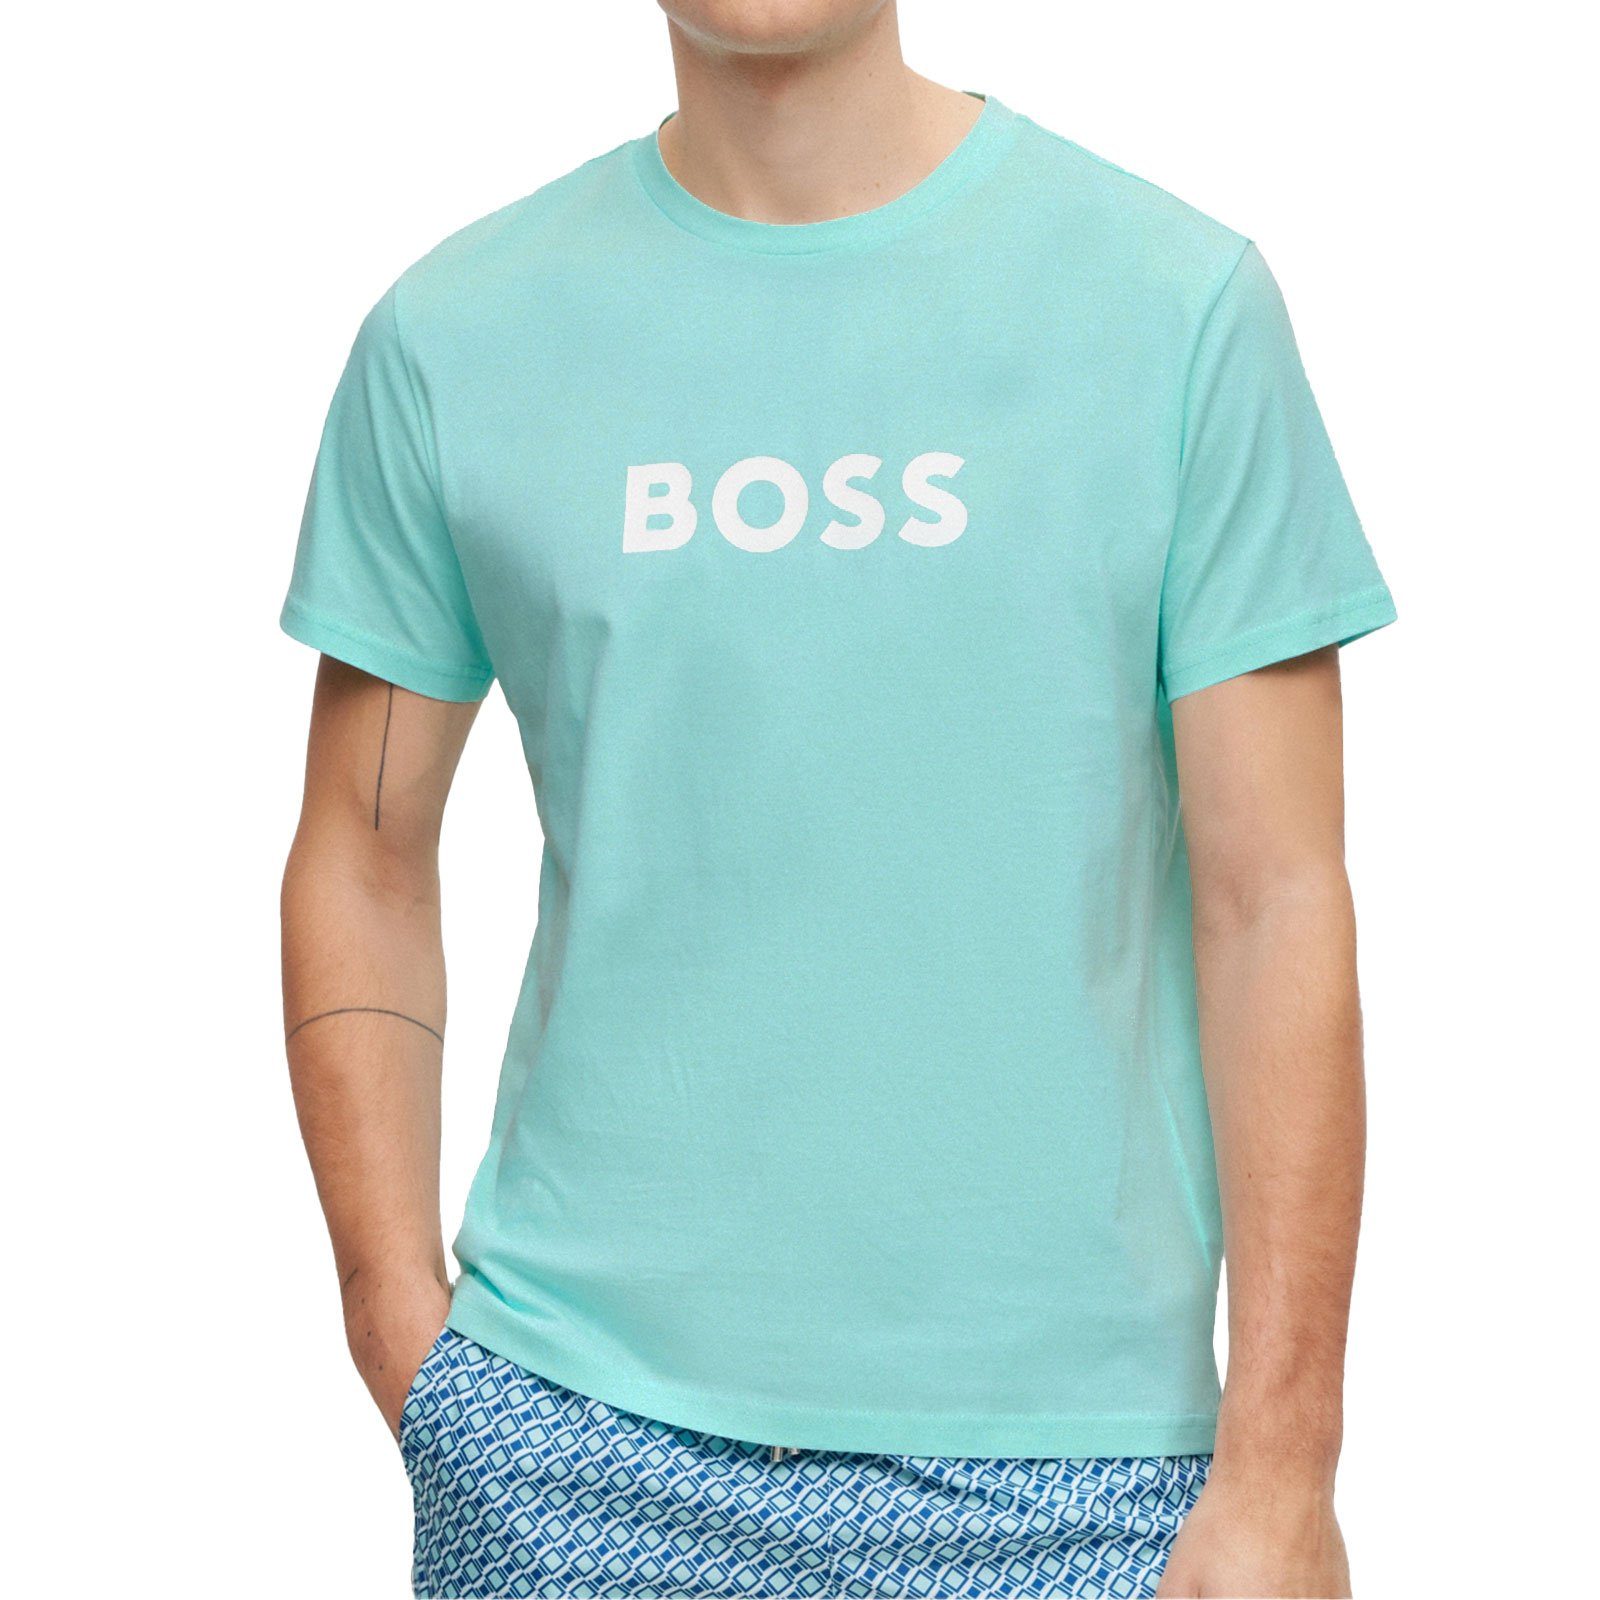 BOSS 356 Markenprint auf der RN green open T-Shirt mit Brust T-Shirt großem